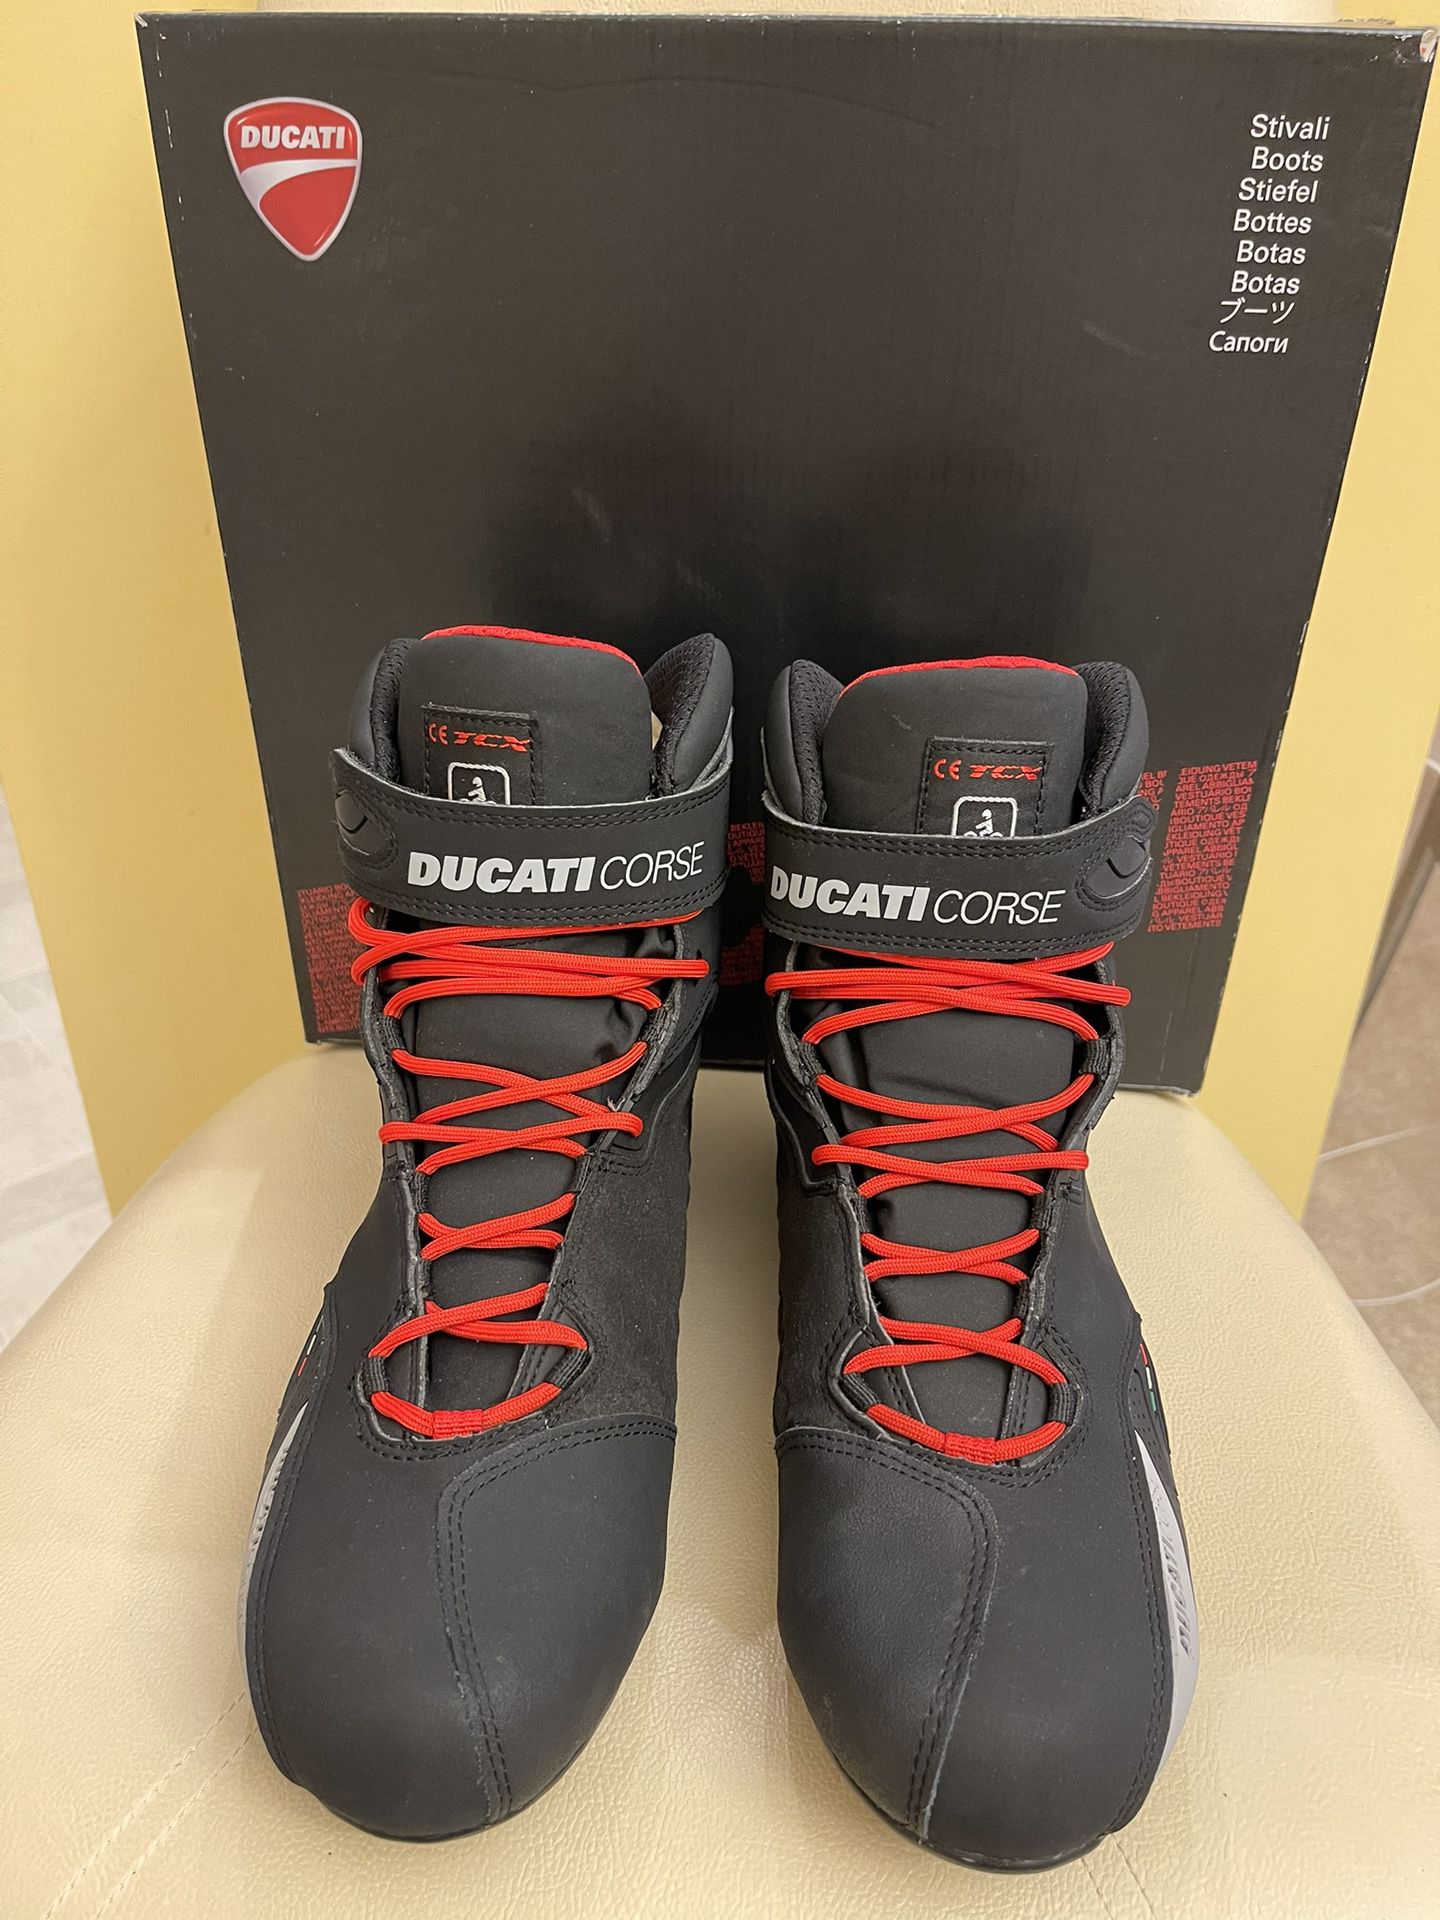 Ducati Corse Men’s Boots Size 9/43